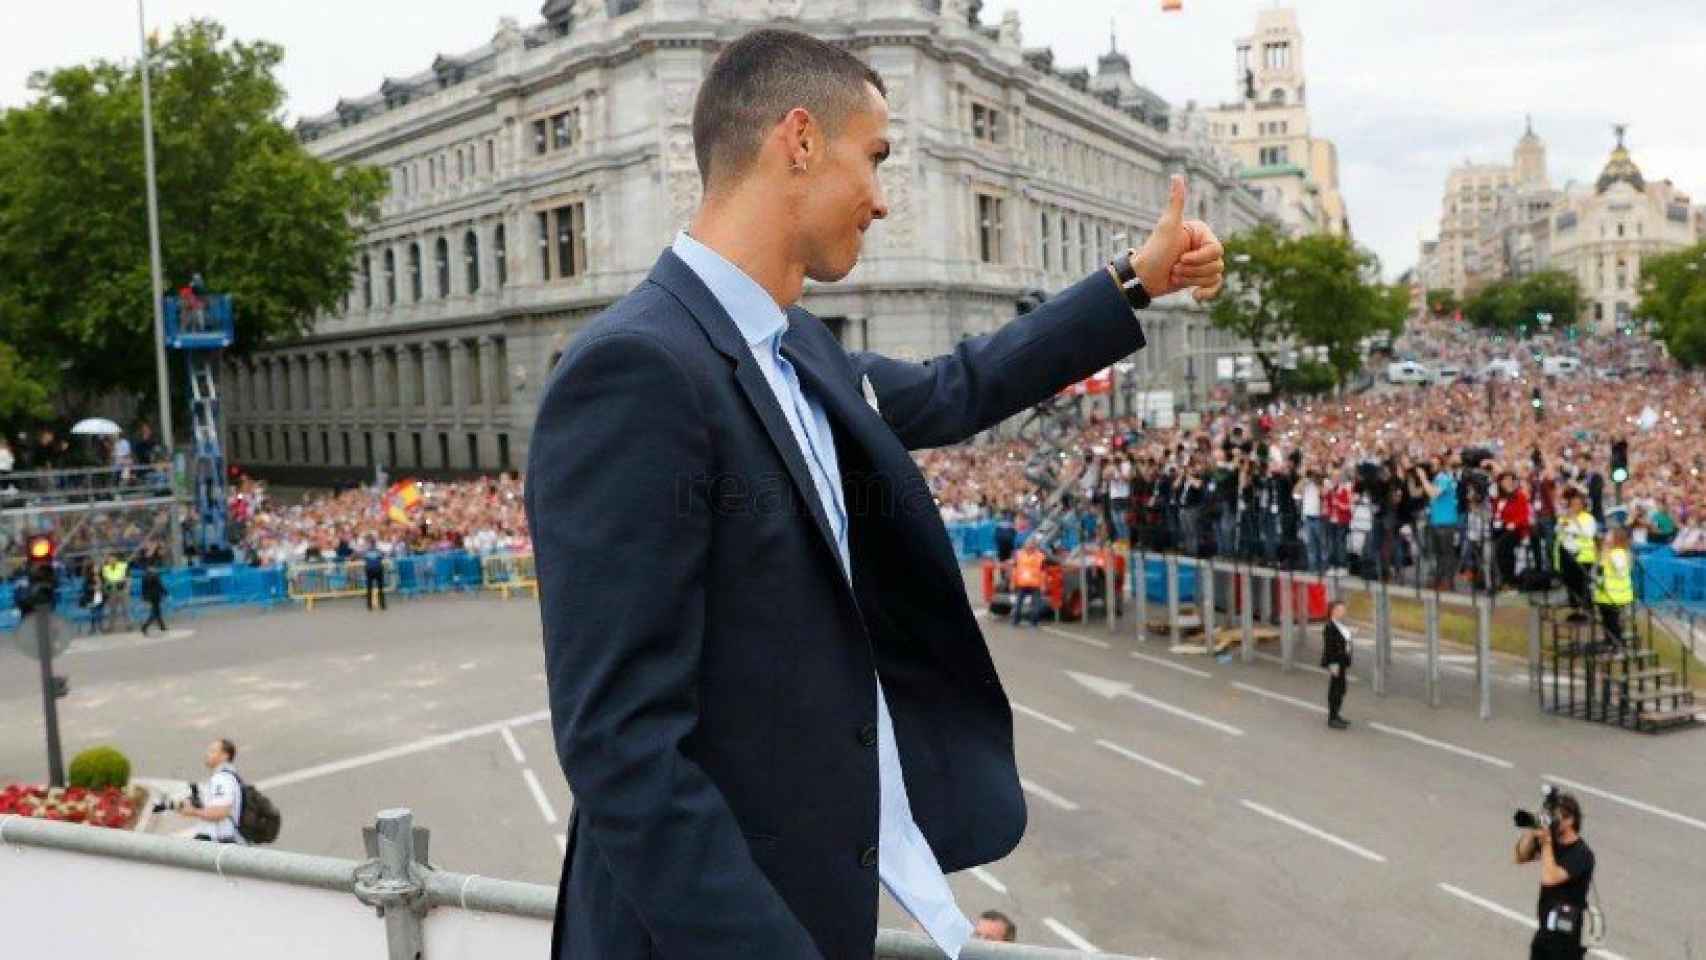 Cristiano Ronaldo durante la celebración de Cibeles